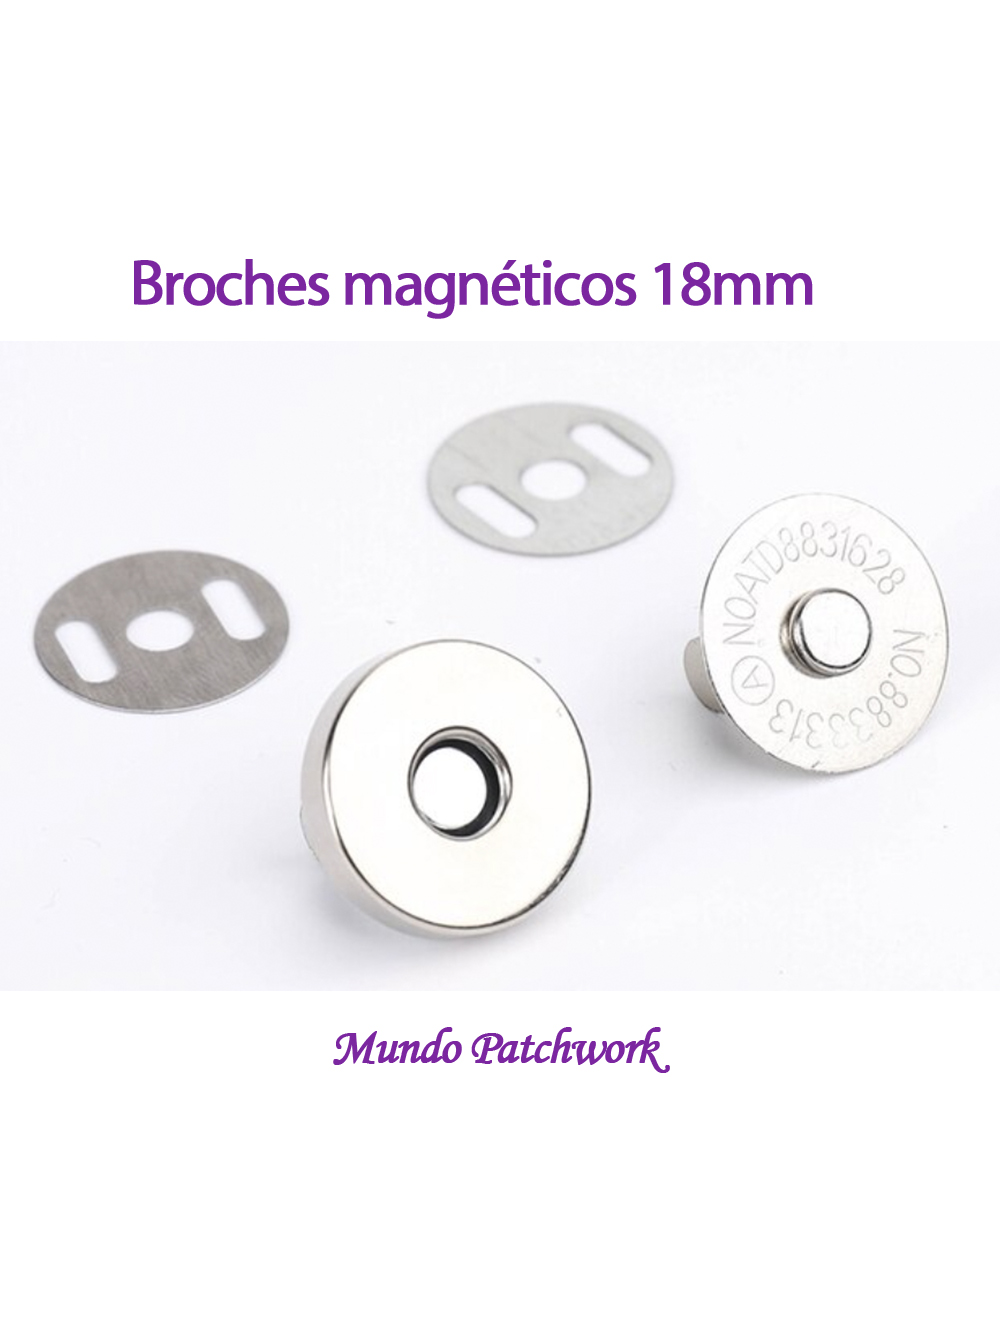 Broches metálico magnéticos a presión mide 18 mm color dorado x 4